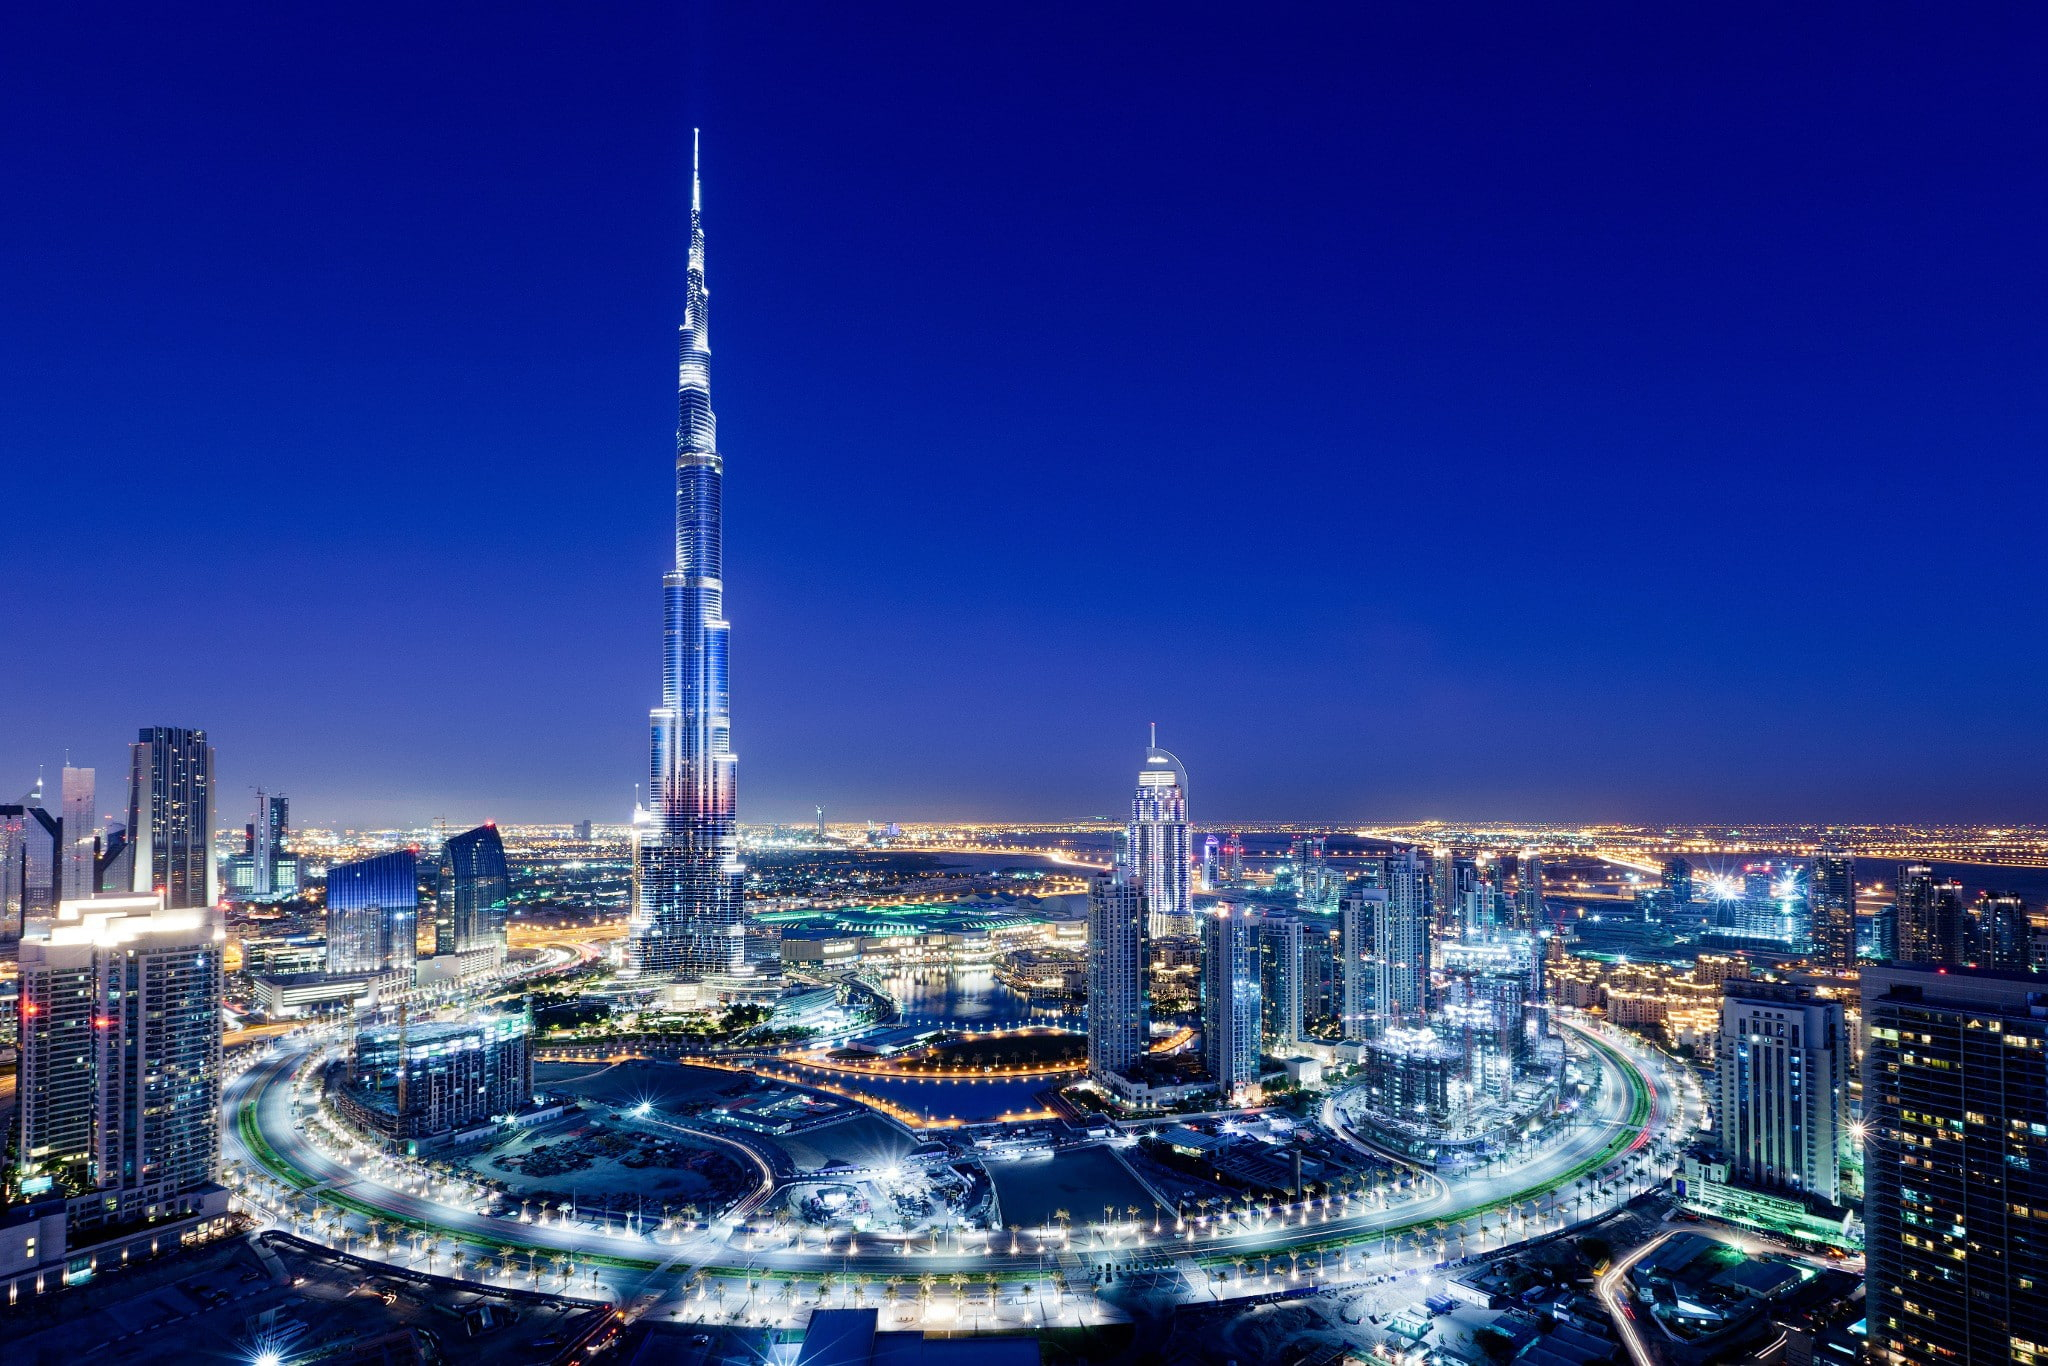 UAE city of Dubai wallpaper, burj khalifa building, lights, Night